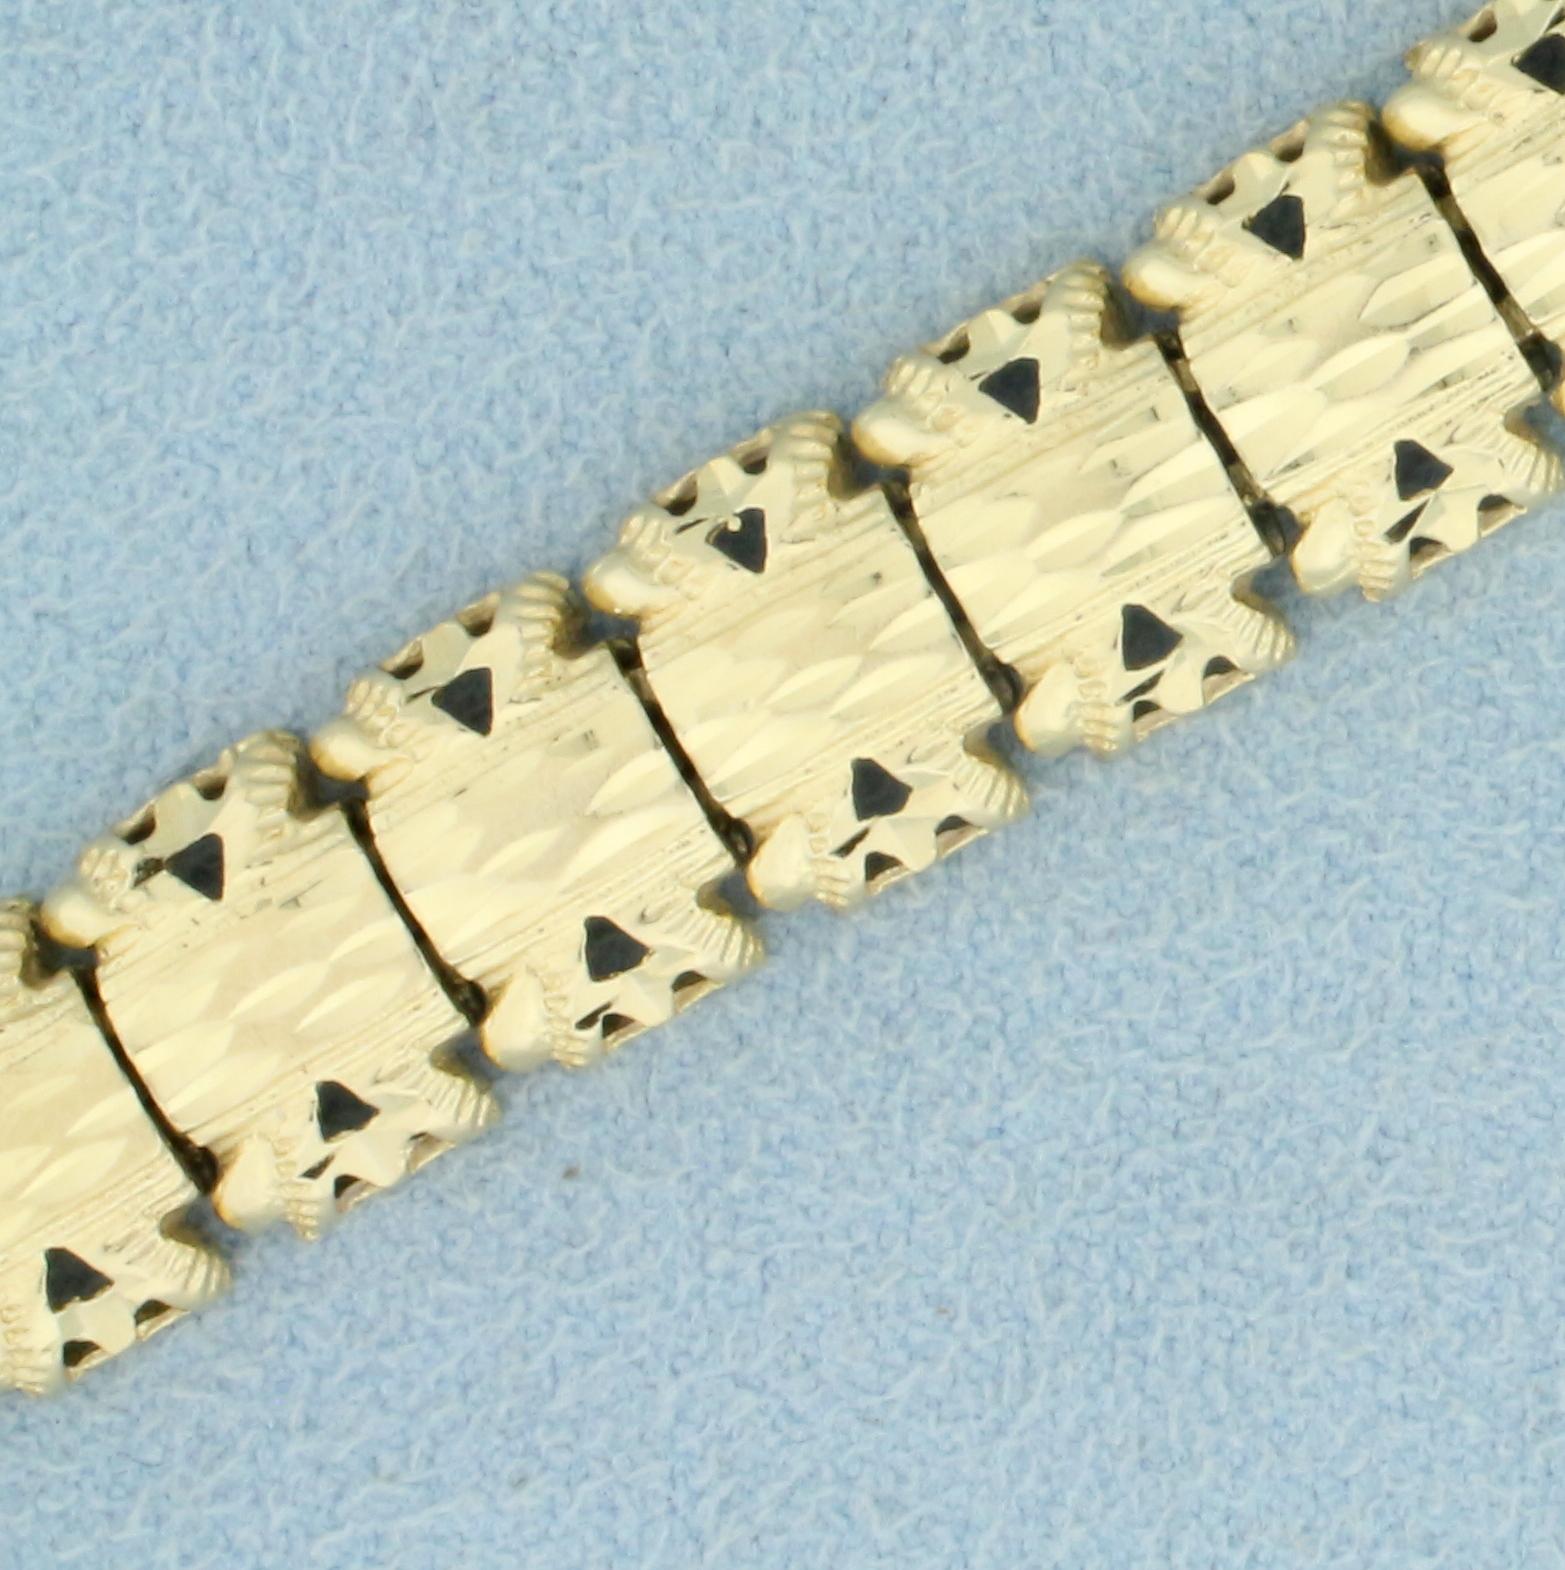 Diamond Cut Designer Bracelet In 14k Yellow Gold